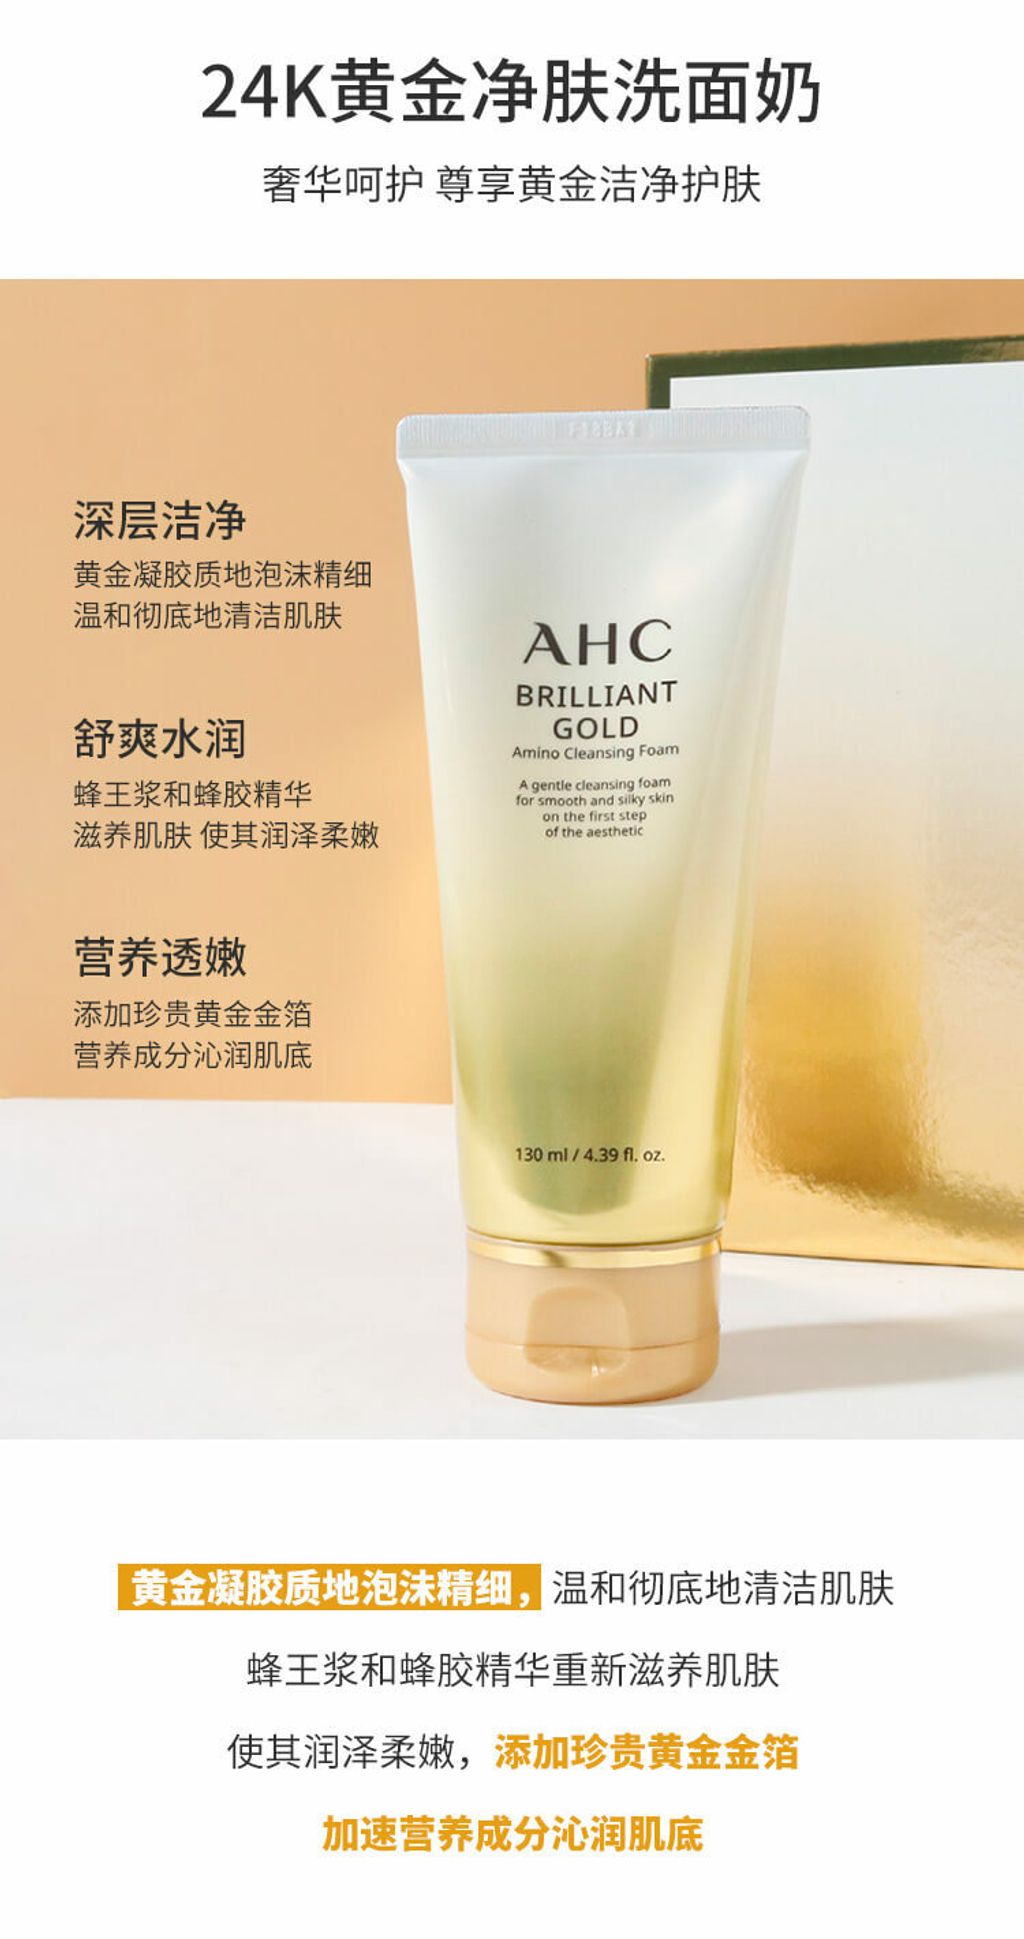 JuzBeauty_JuzBeautyMalaysia_JuzPretty_Authentic_Kbeauty_Malaysia_Skin_Care_Cosmetics_Jbeauty_Australia_Health_Care_AHC_Brilliant_Gold_Special_Set_ (6).jpg